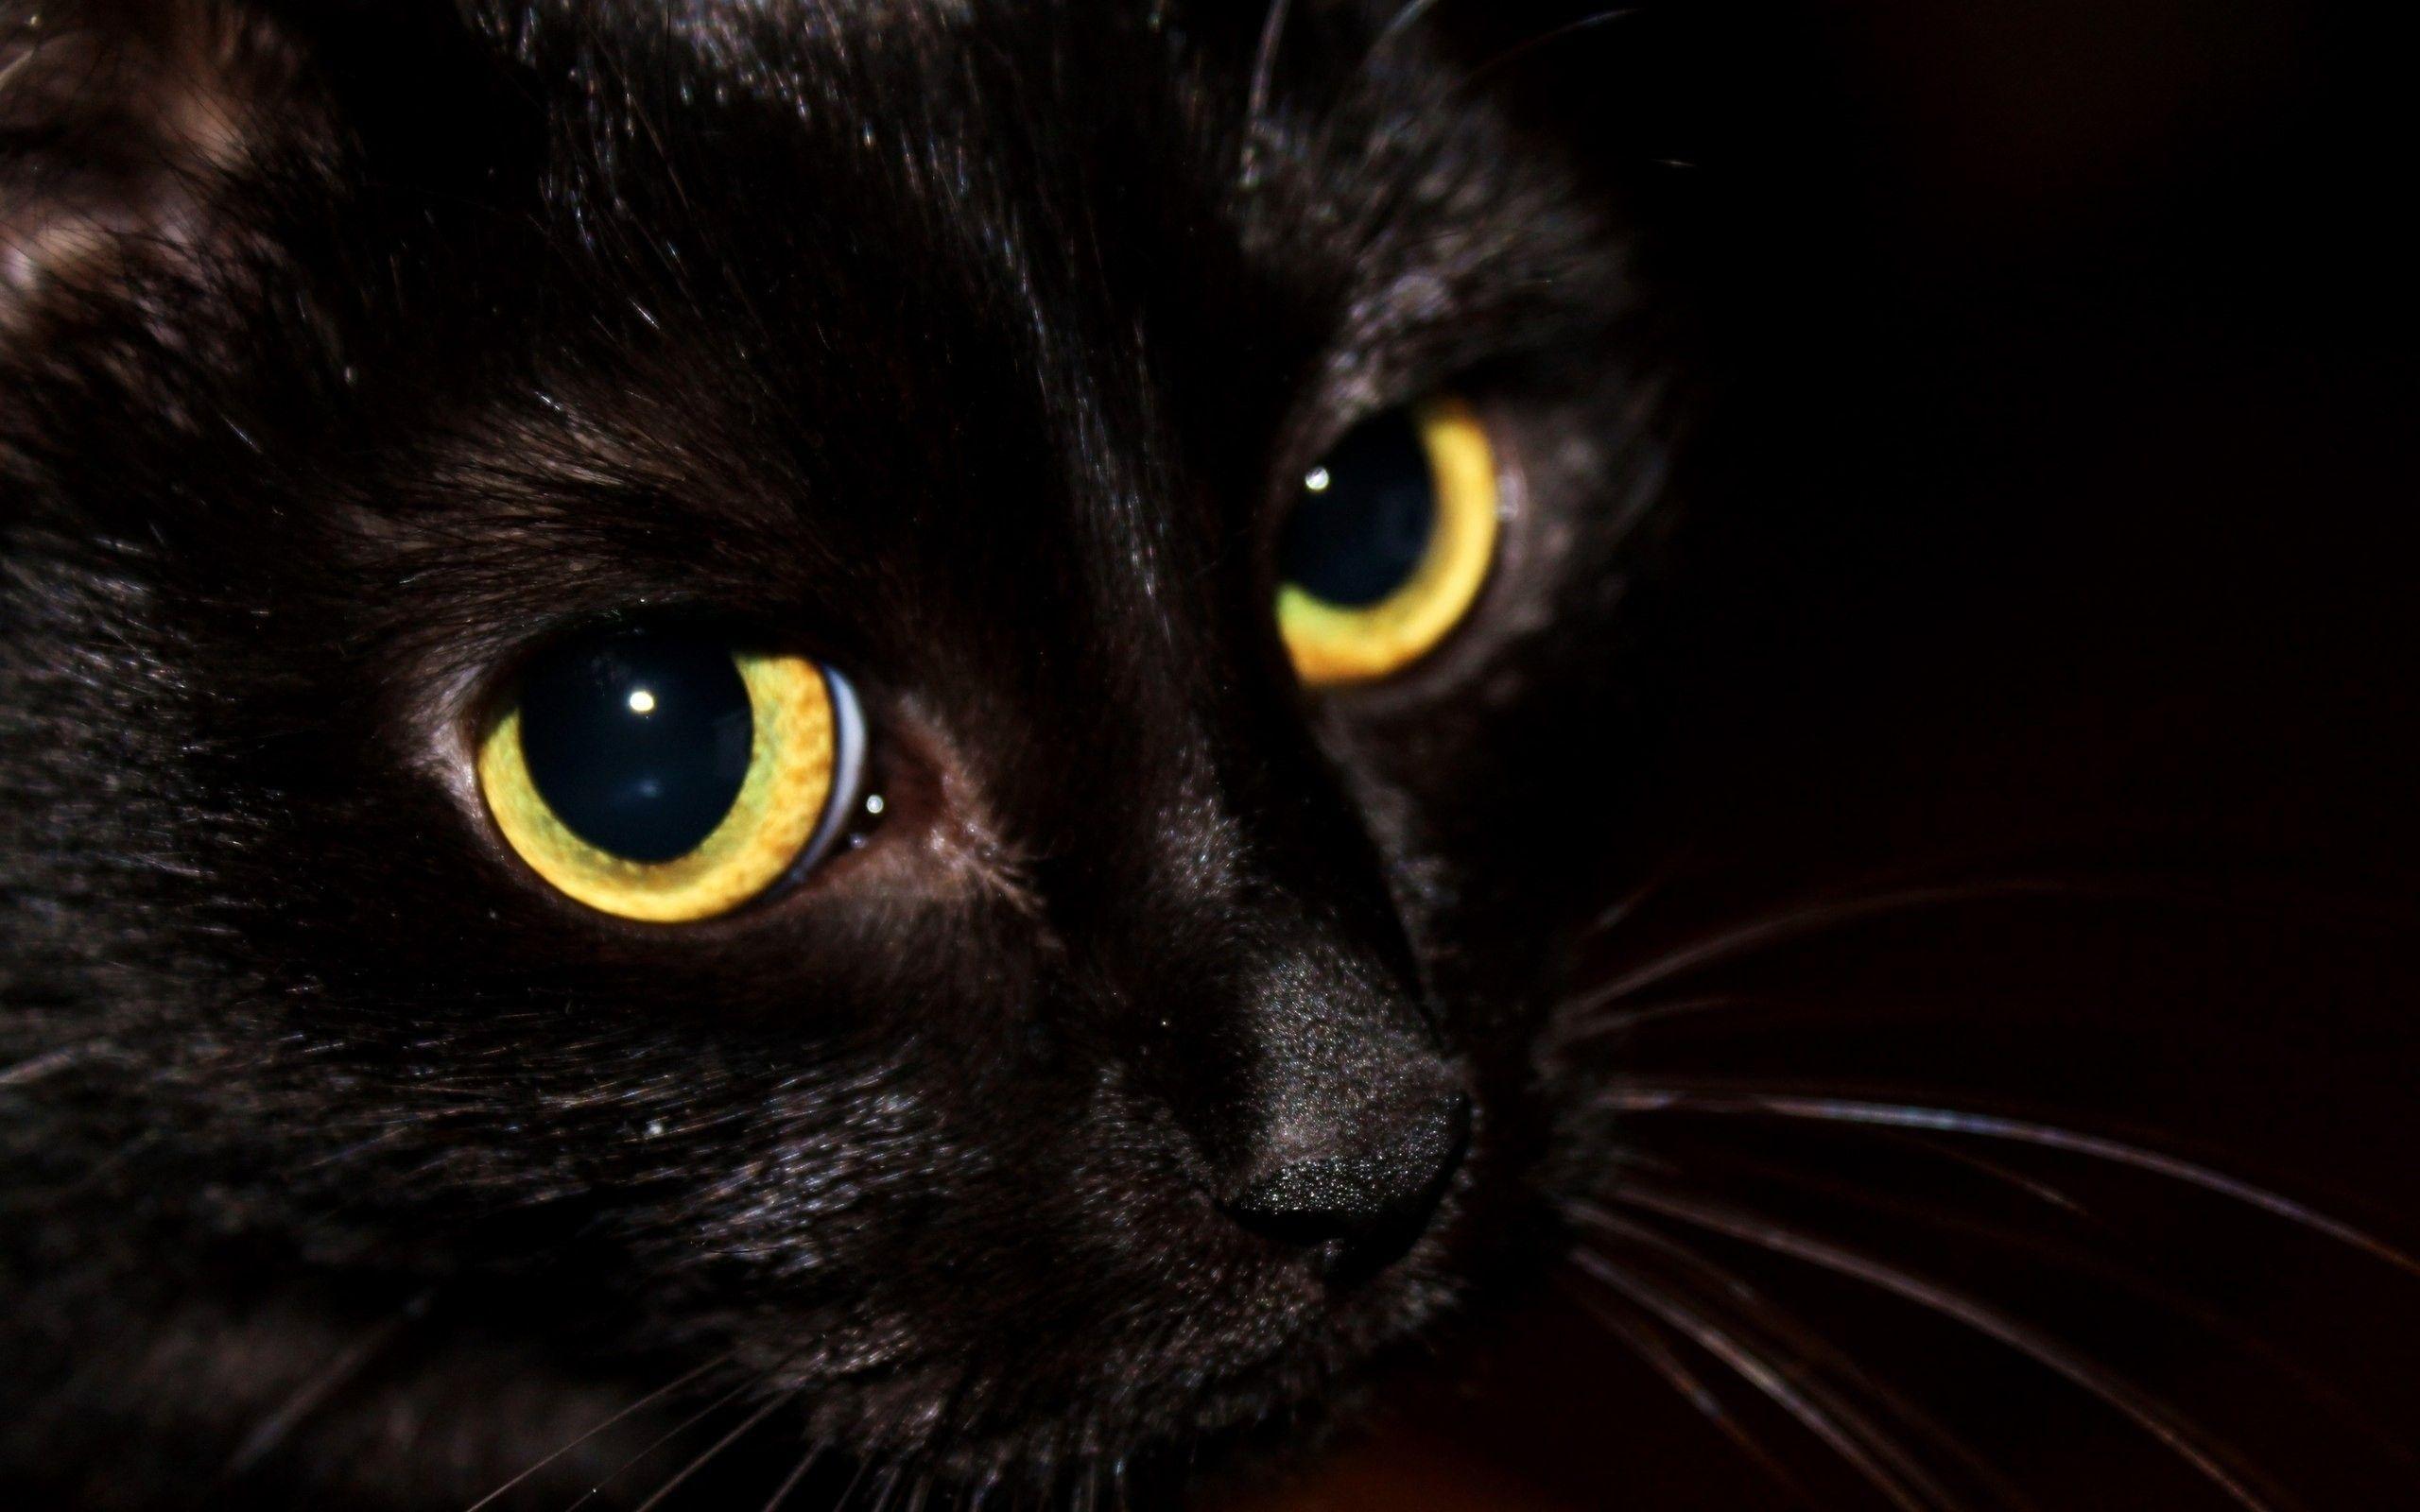 Black Cat Face Close Up Widescreen Wallpaper. Wide